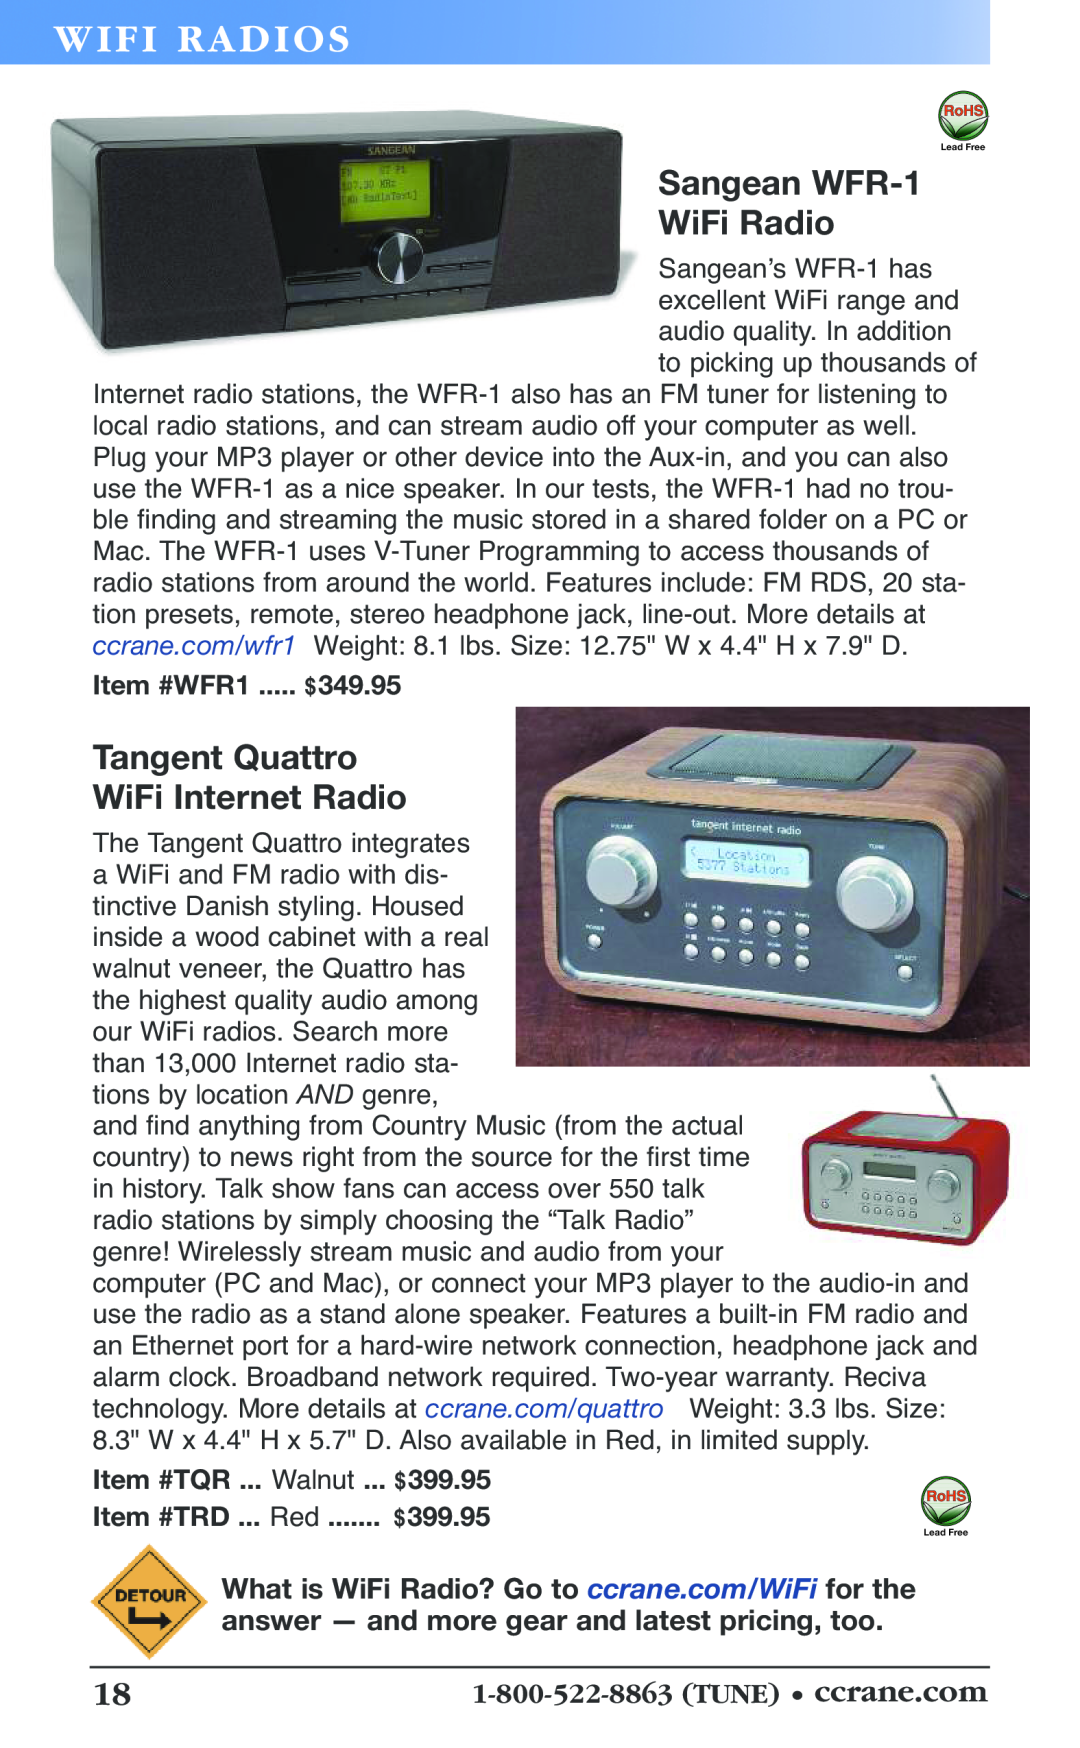 C. Crane 19f manual Wifi Rad Io S, Sangean WFR-1 WiFi Radio, Tangent Quattro, WiFi Internet Radio, Item #WFR1 ..... $349.95 